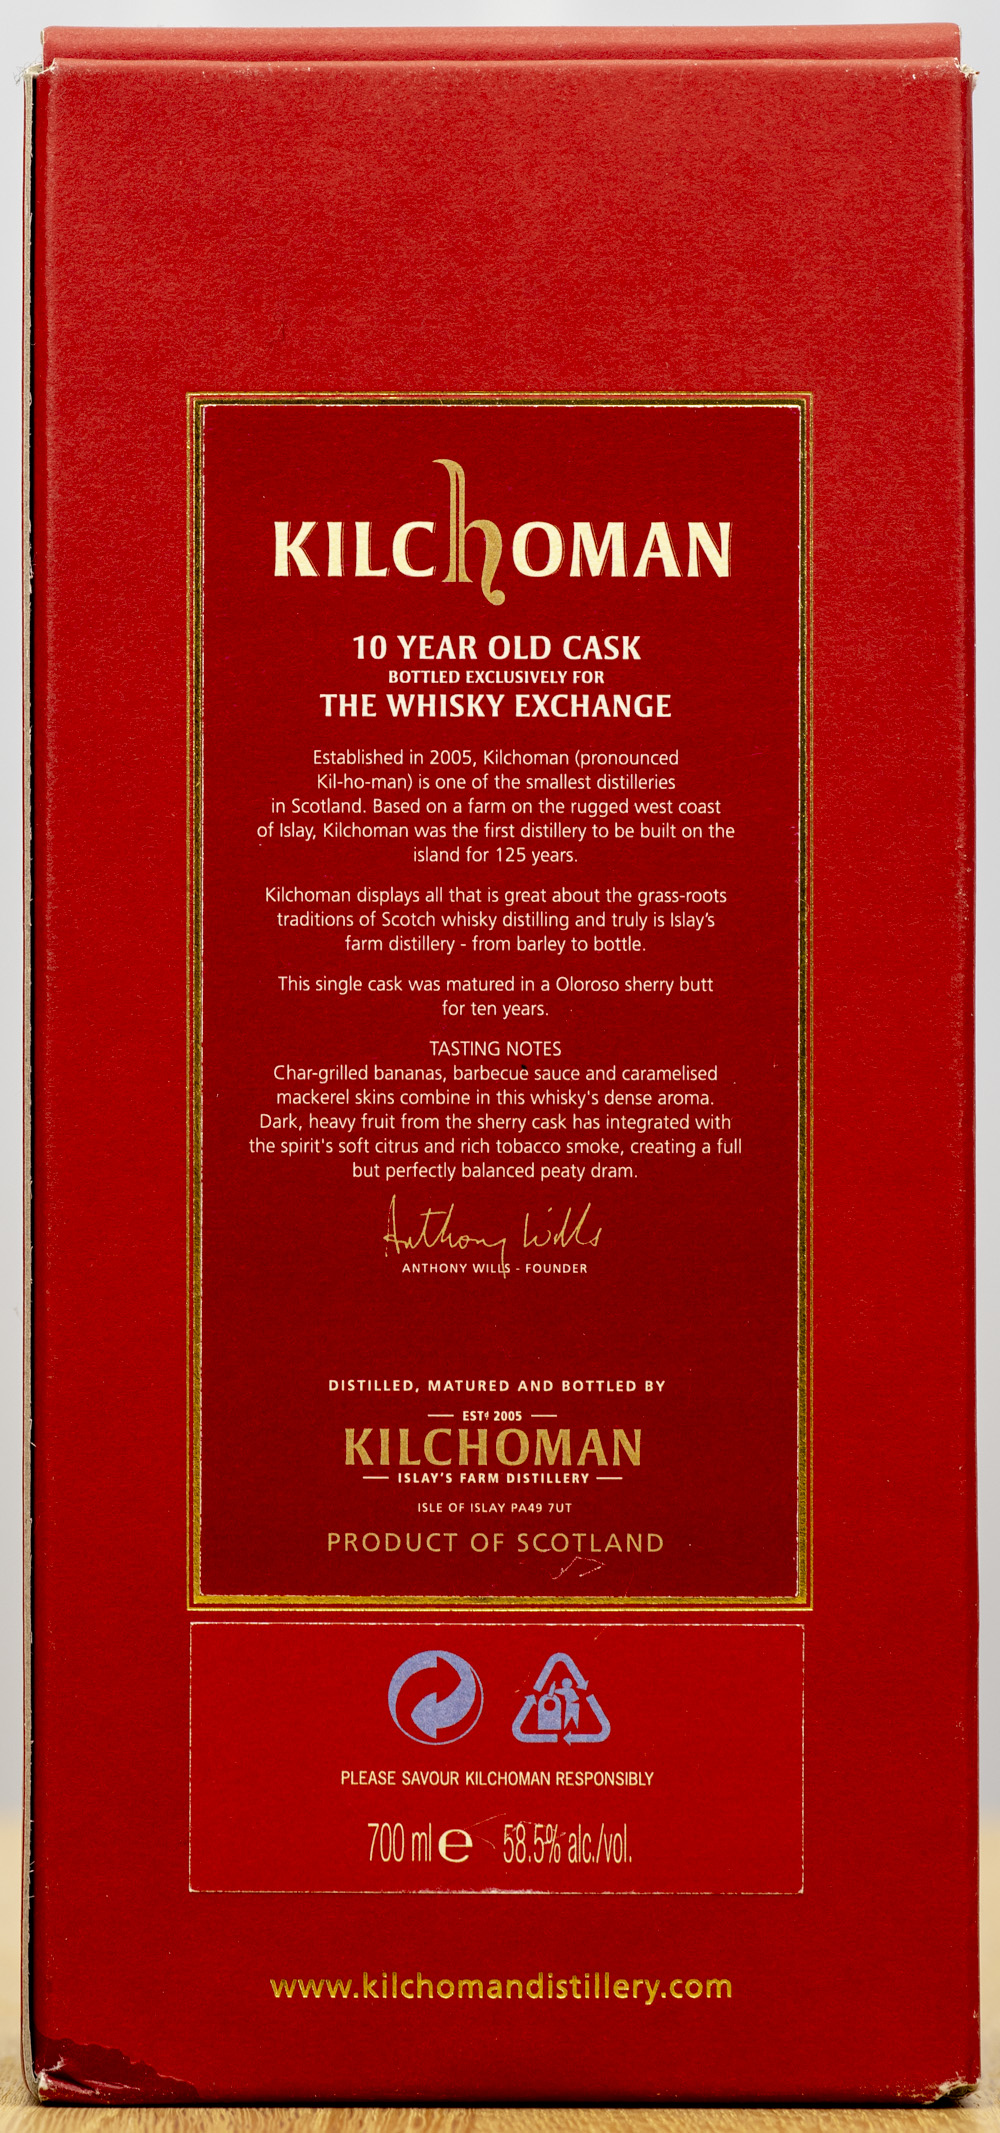 Billede: PHC_1545 - Kilchoman 10 year Whisky Exchange - box back.jpg